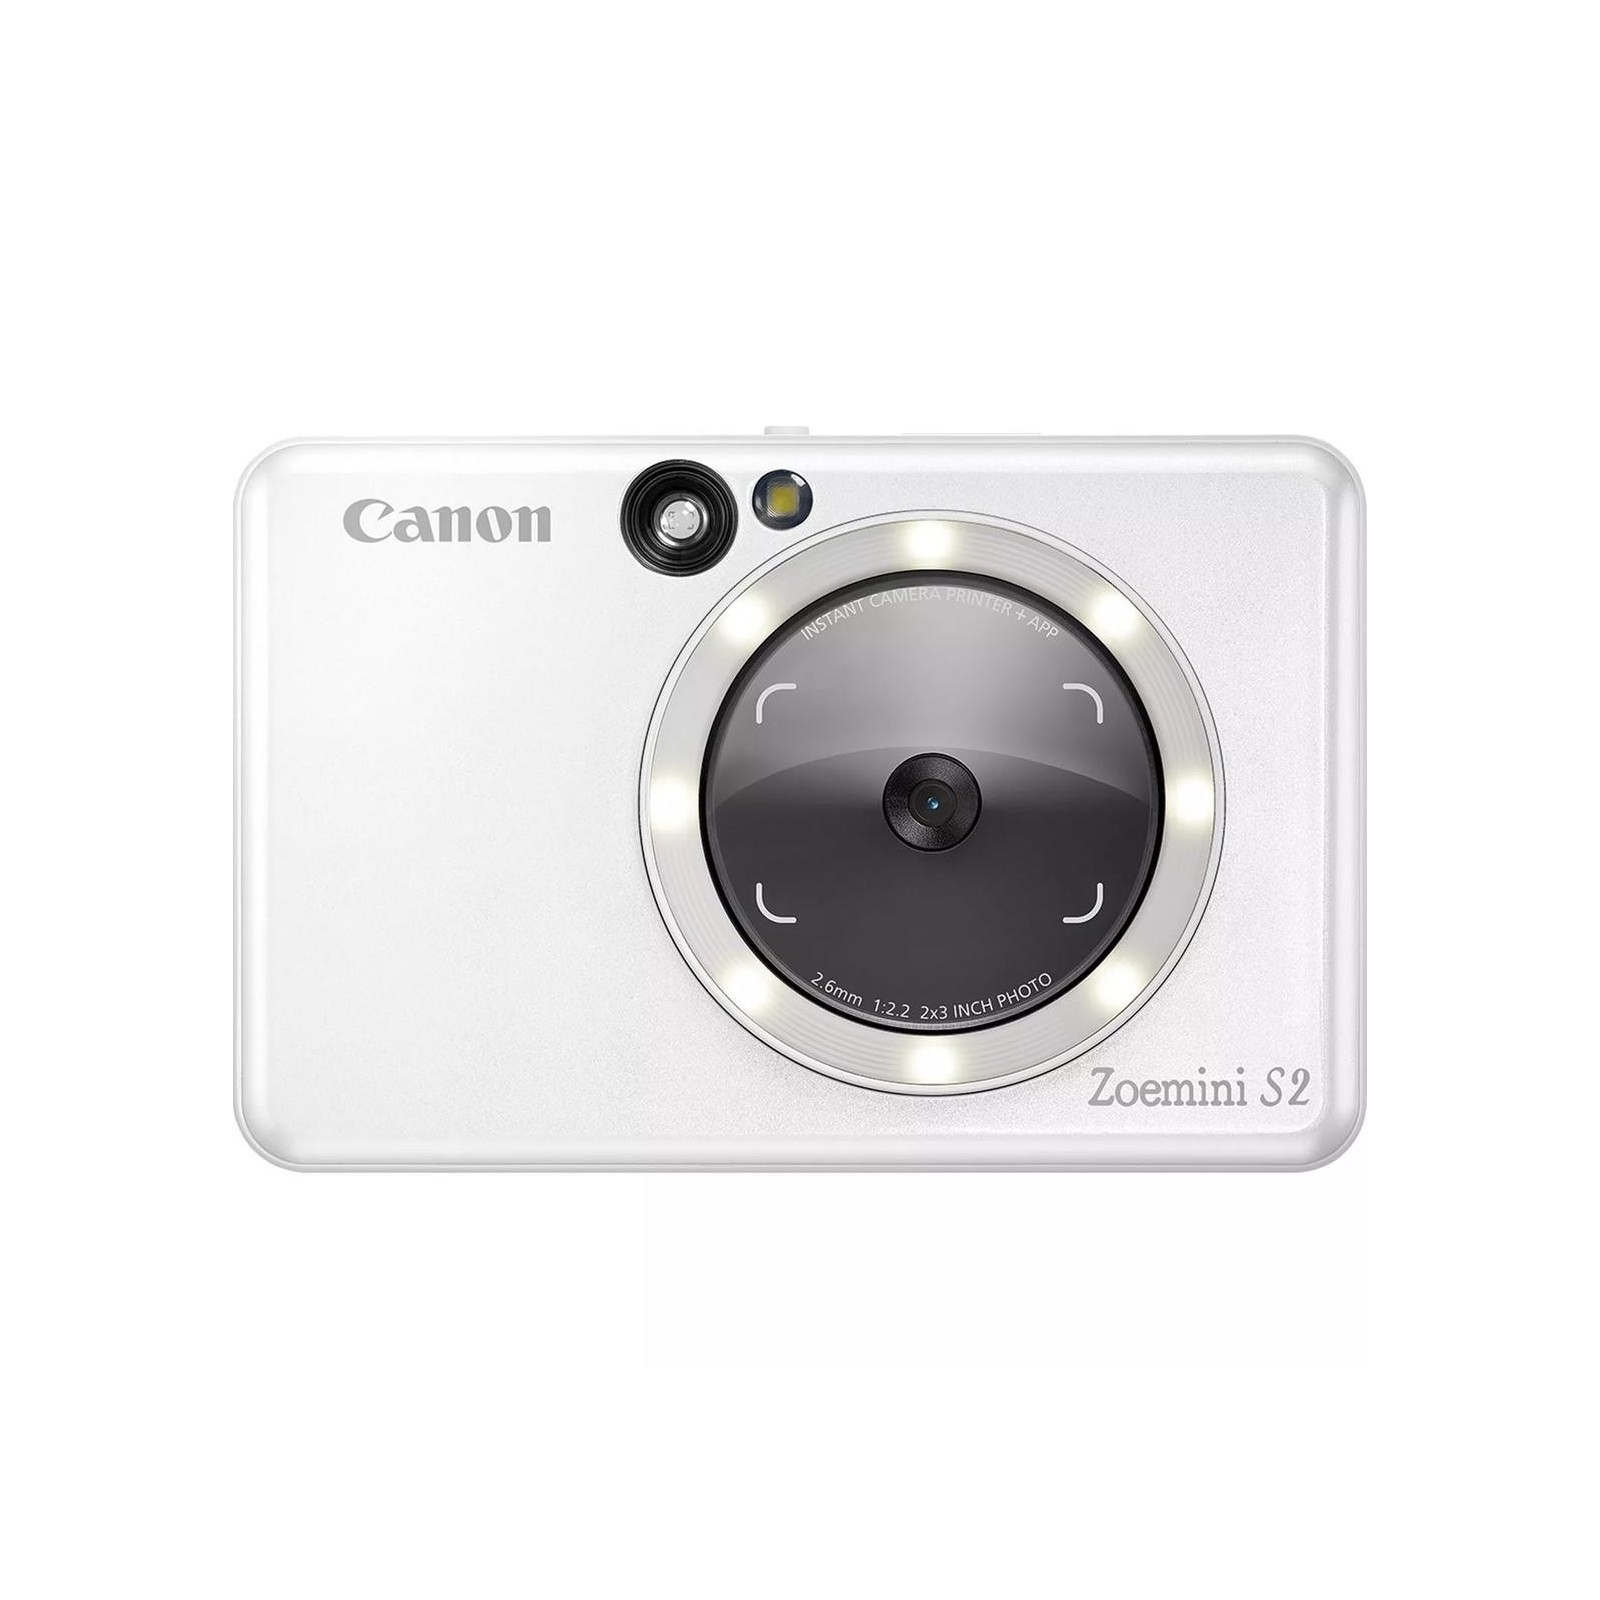 Camara Impresora Instantanea Canon Zoemini S2 Blanco Perla -